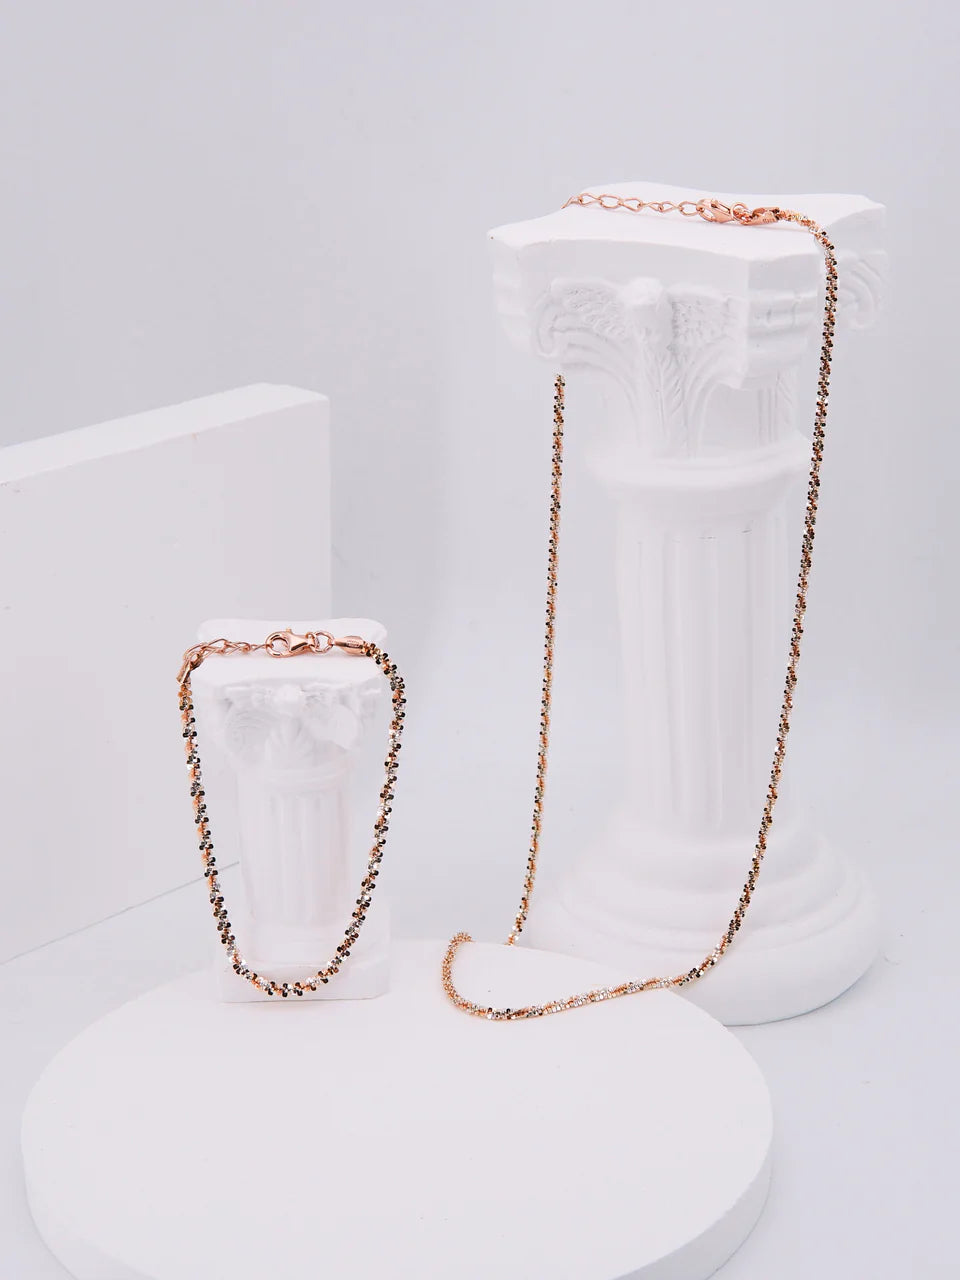 LAFIT· Snowflake - 聖誕限定禮品套裝 意大利精緻珠寶